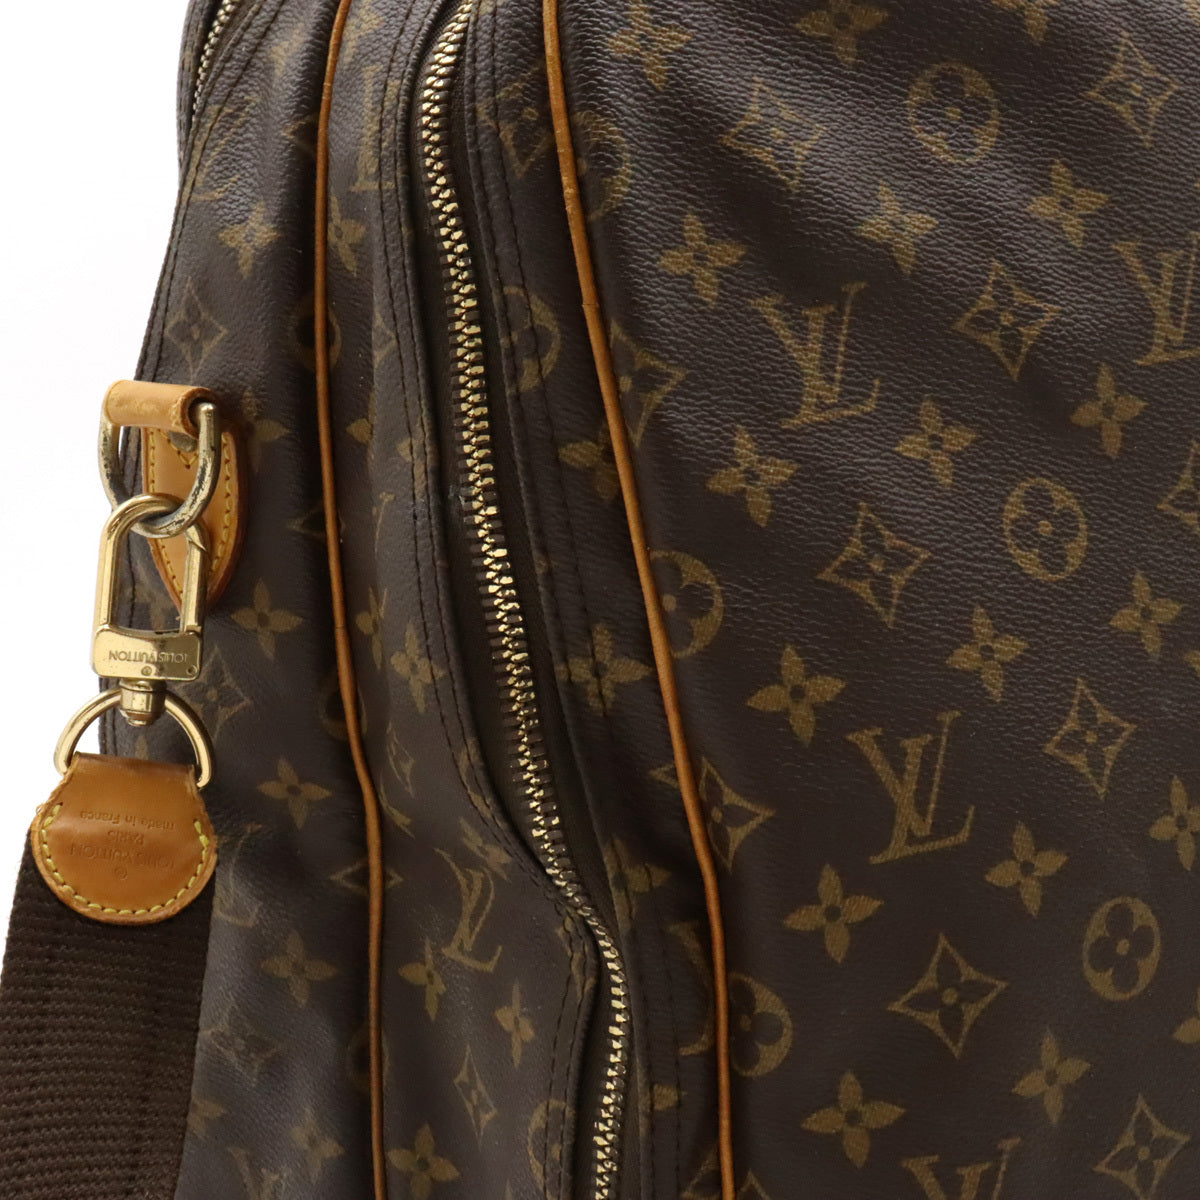 Louis Vuitton Alize 2Way Luggage Bag - Louis Vuitton